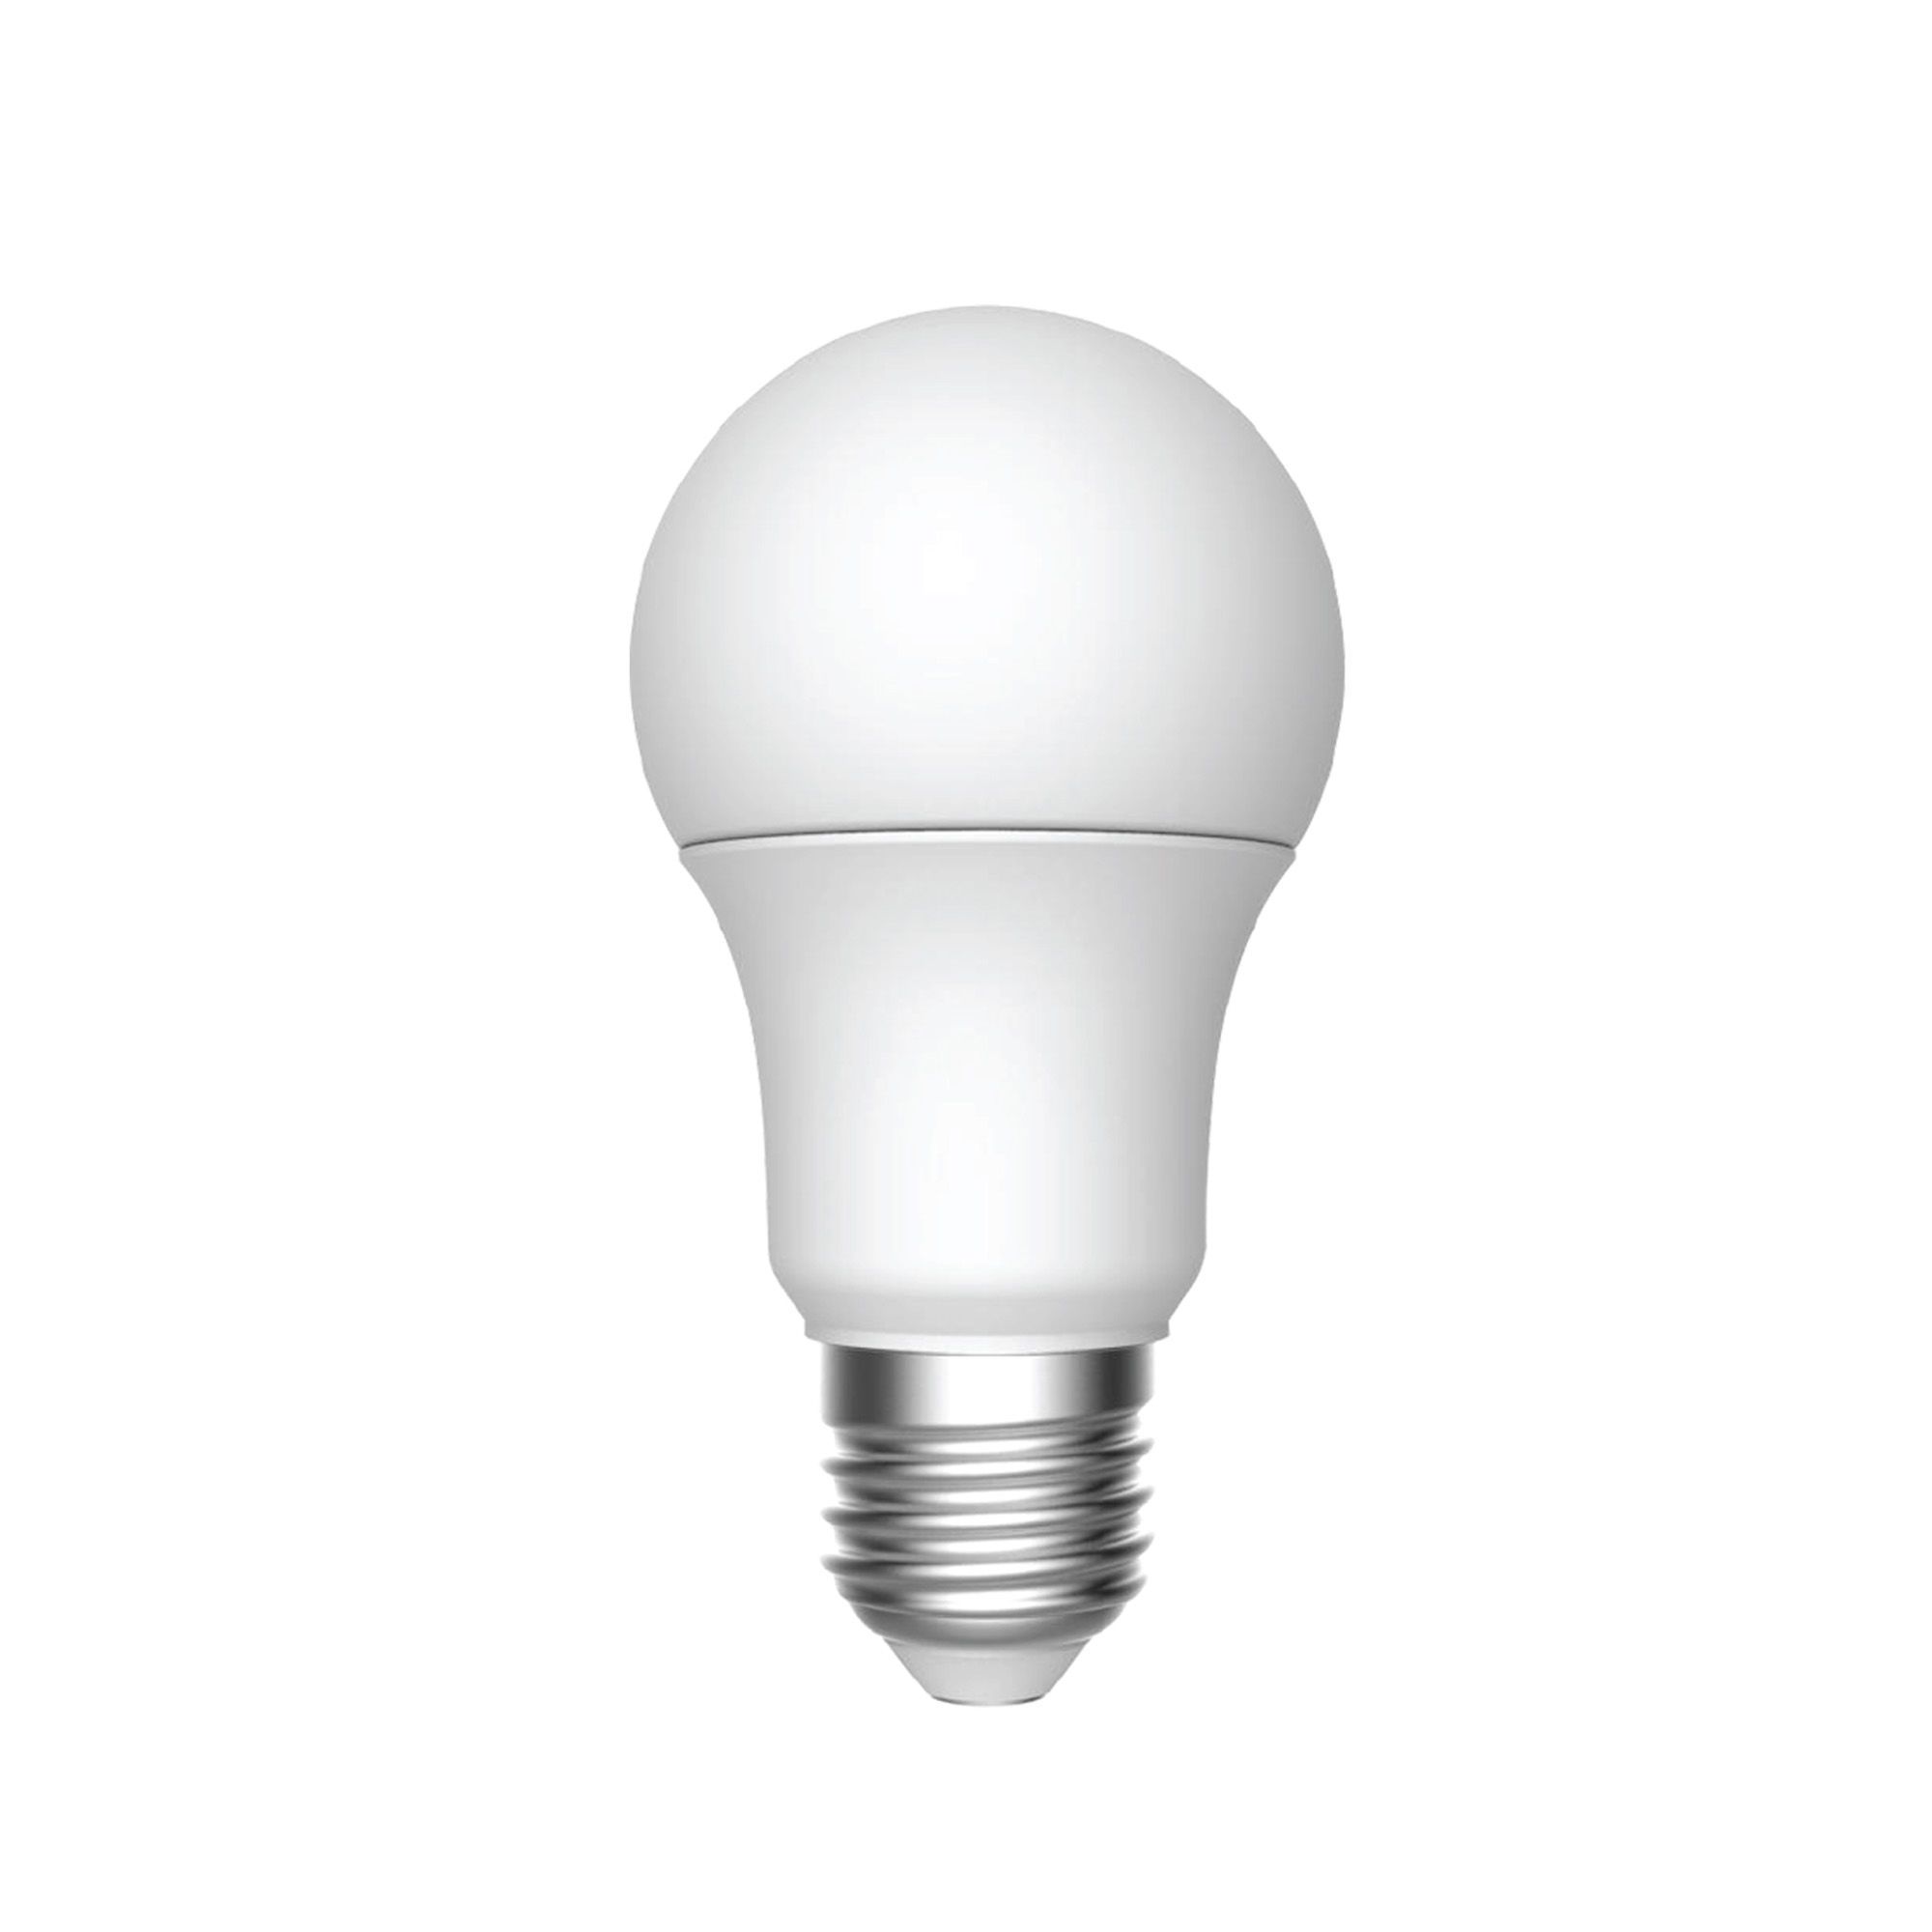 Ampoule incandescente, C7, blanc clair, 4 W, 2/pqt de SYLVANIA